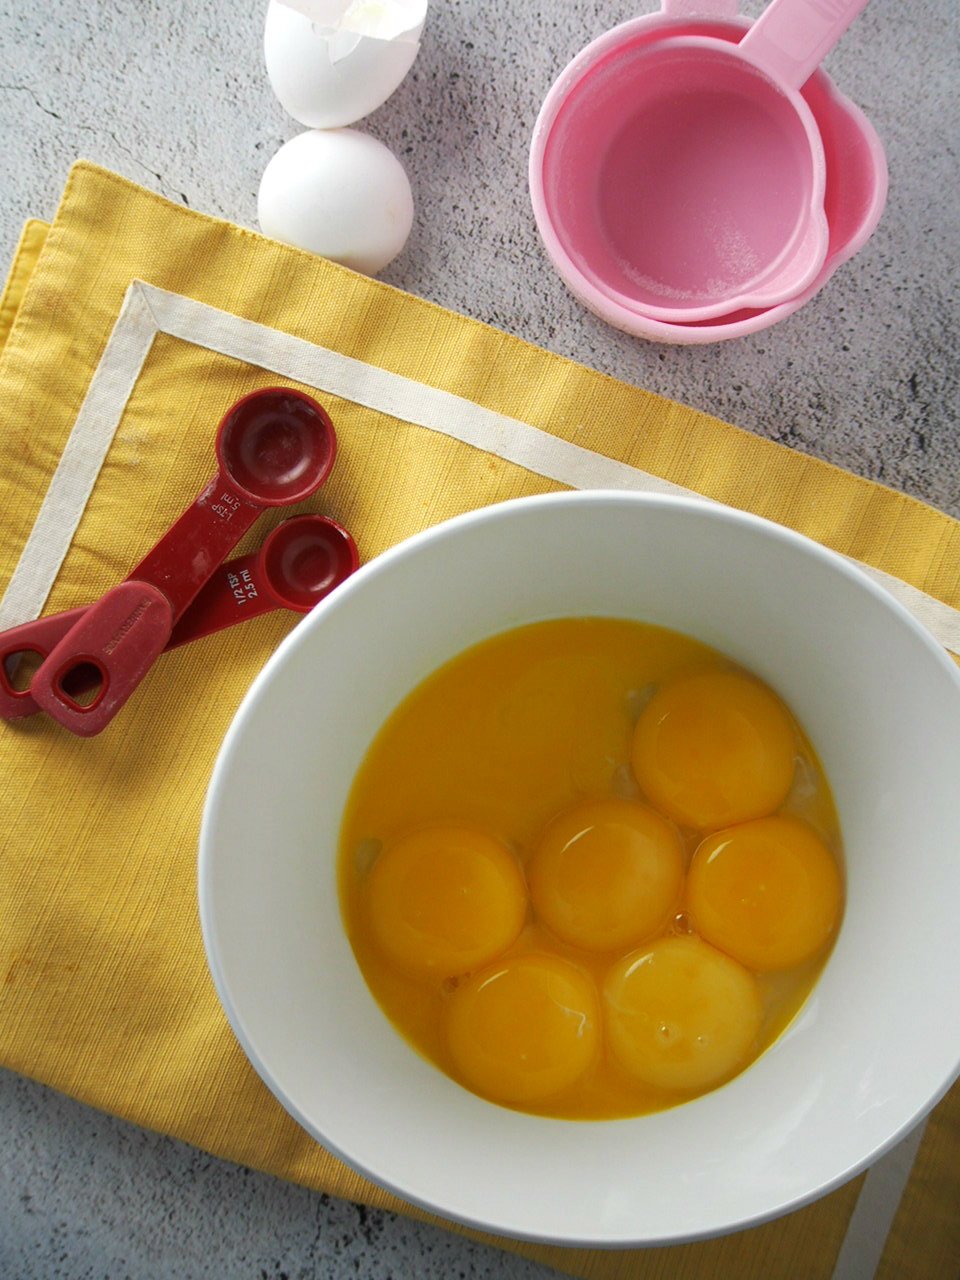 Eggs for making vanilla chiffon cake.